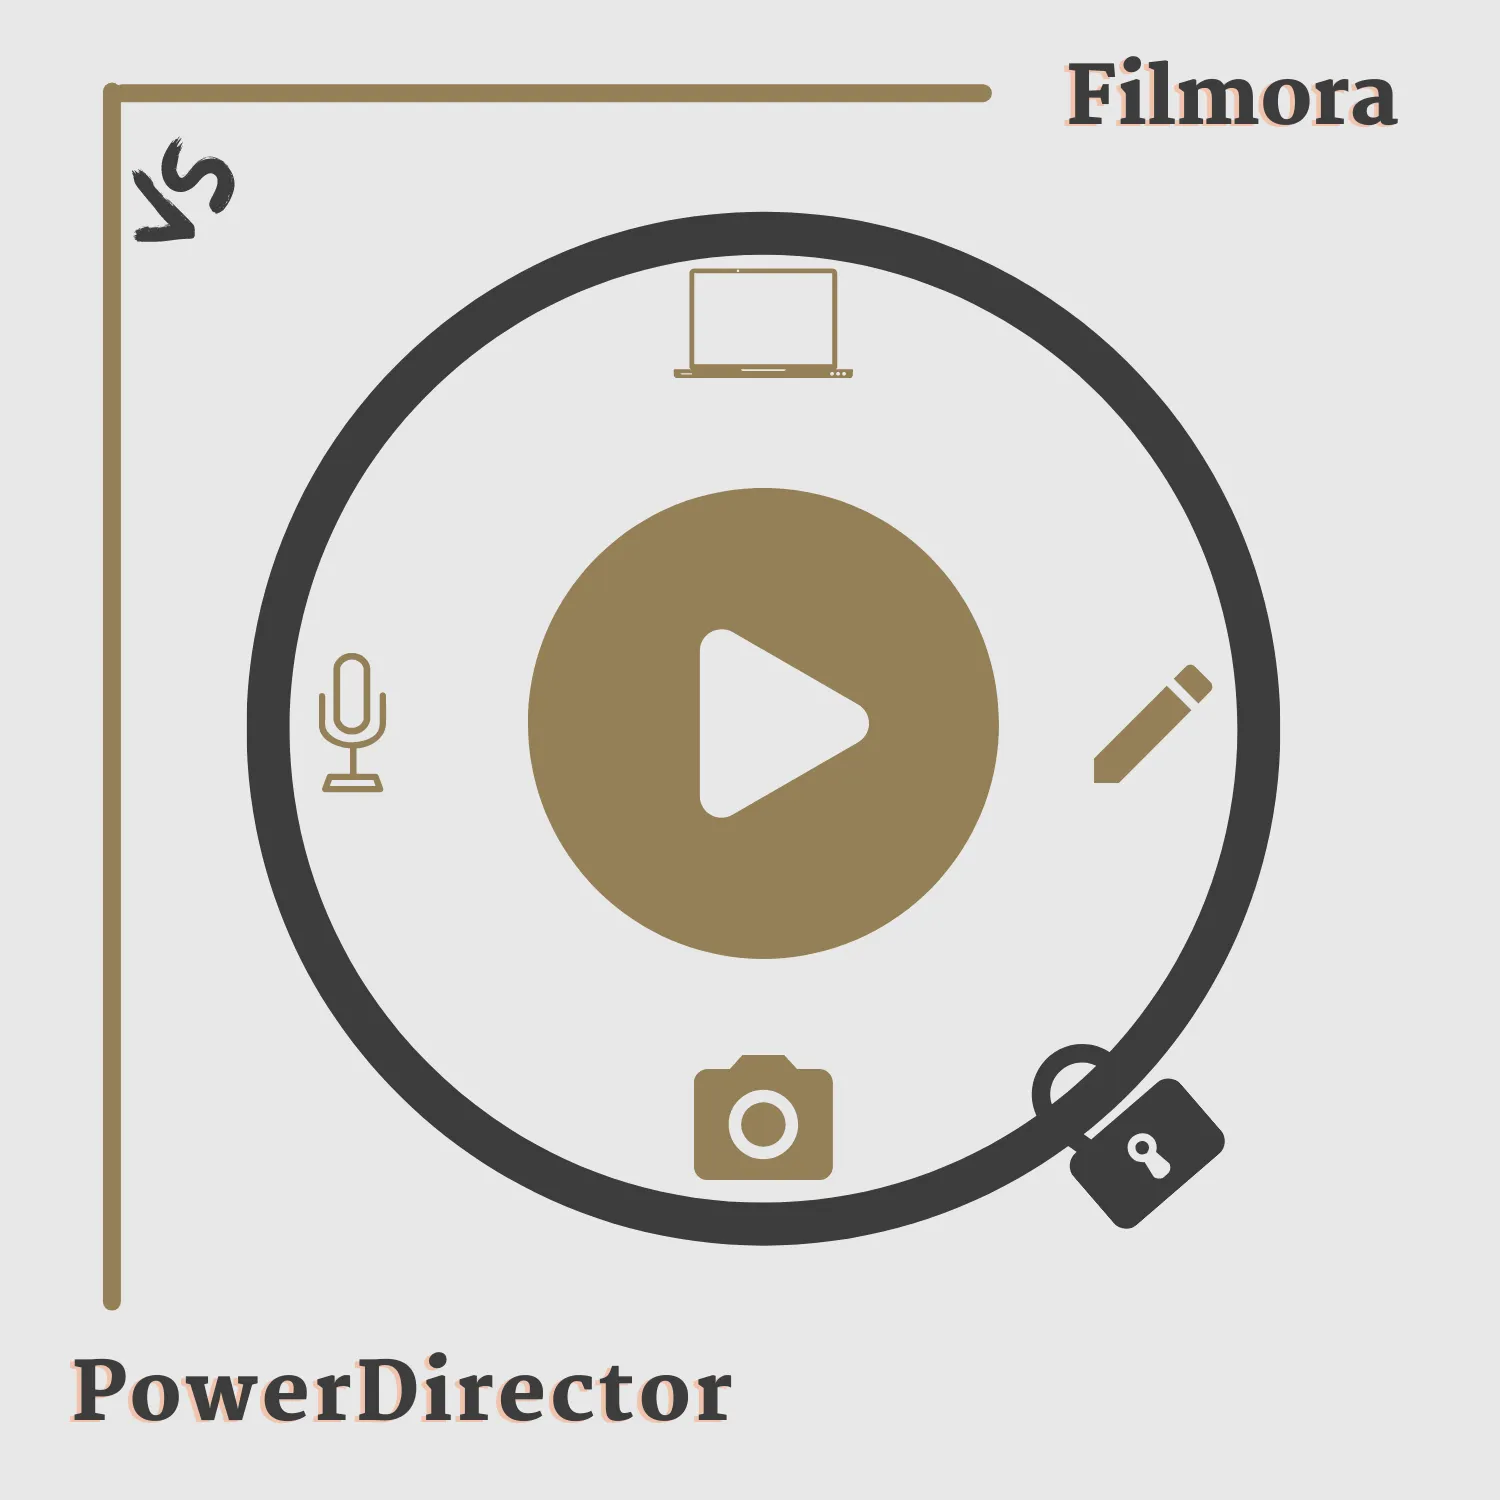 Filmora vs. PowerDirector